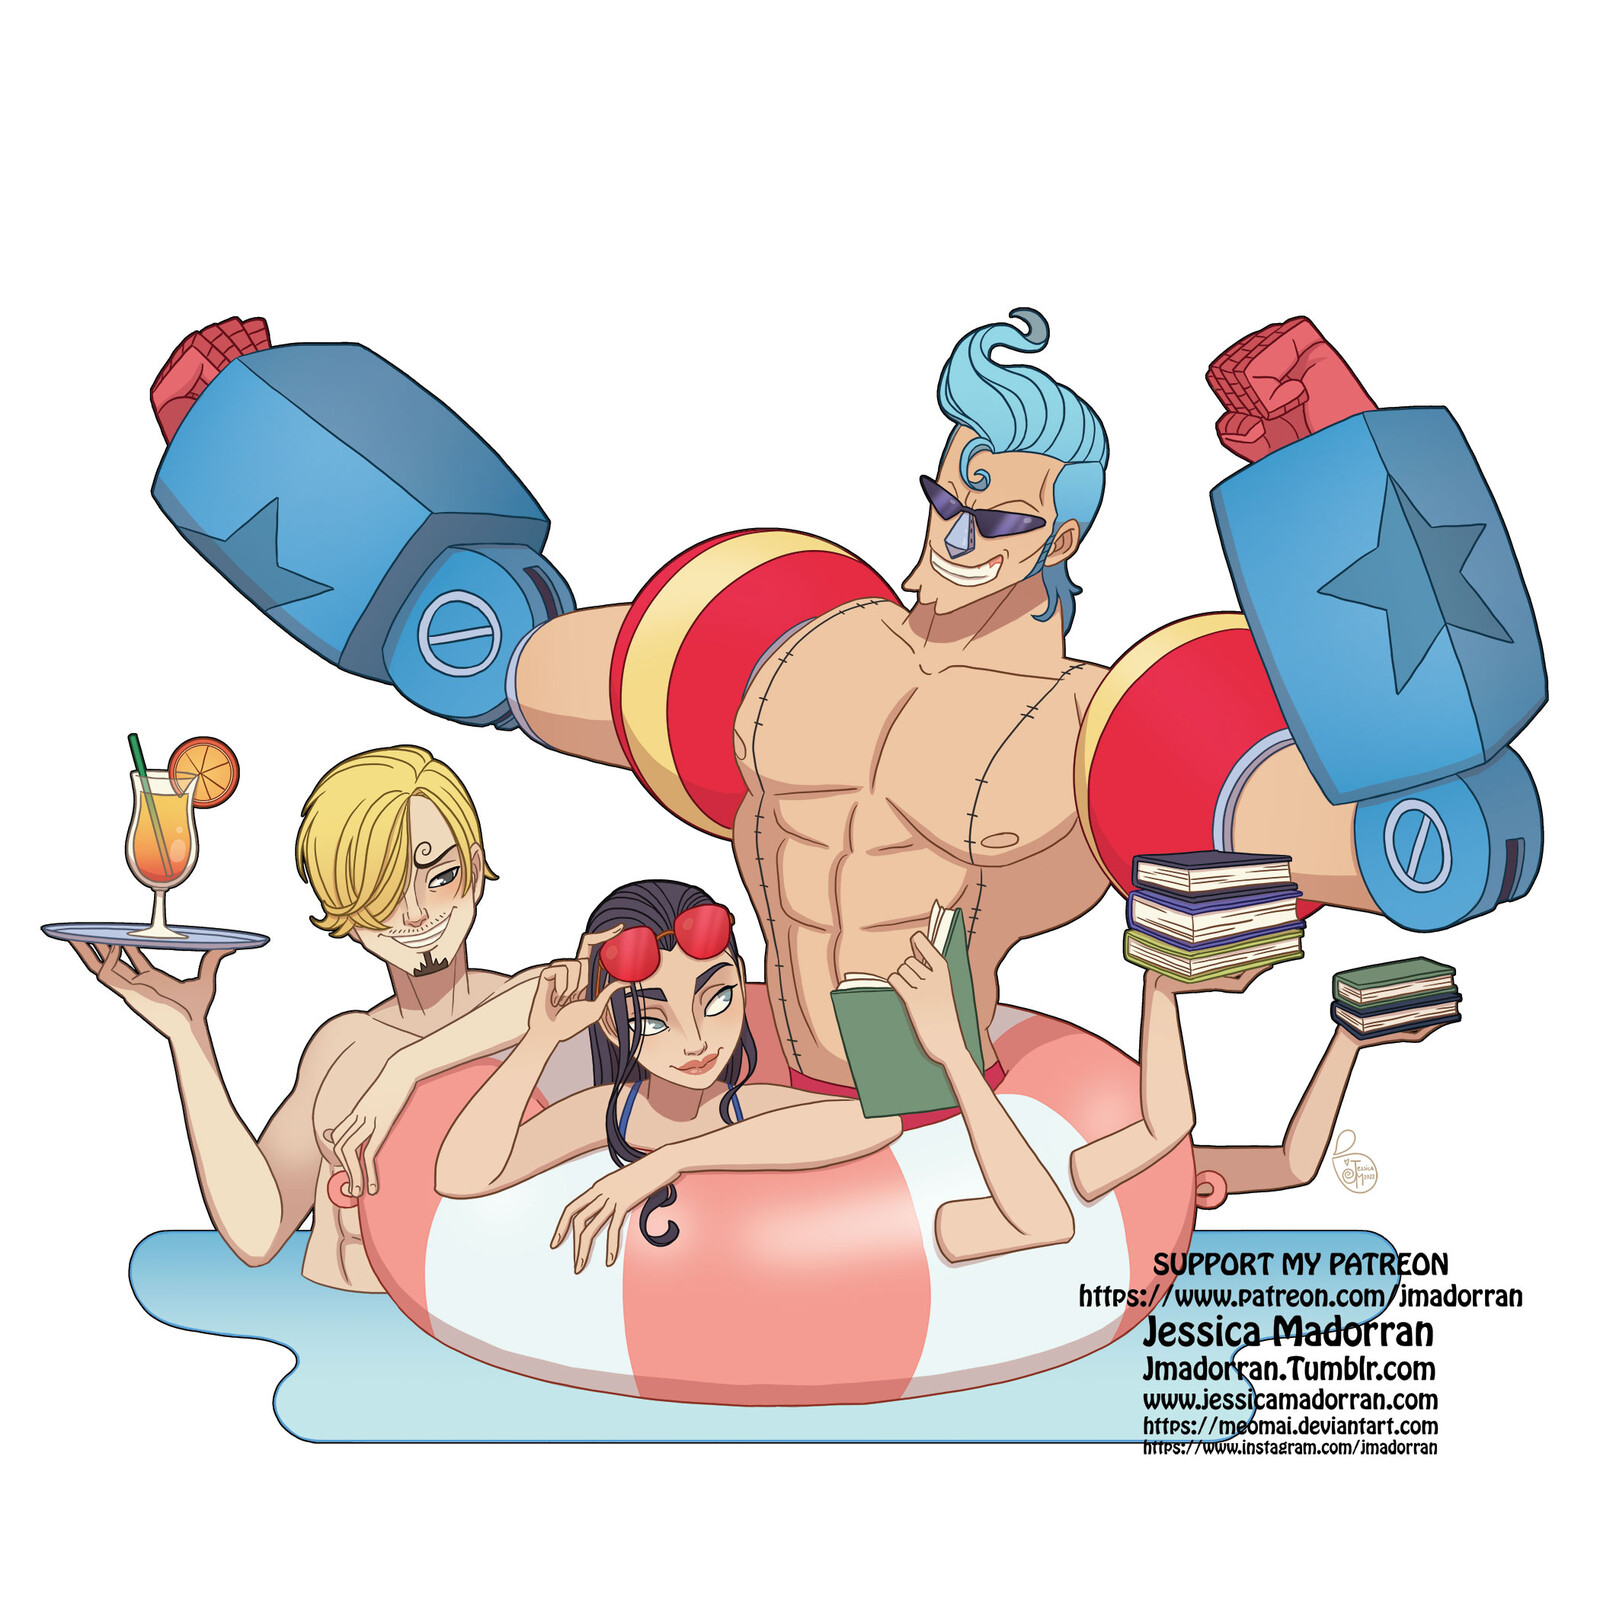 Fan Art - One Piece - Sanji, Franky, and Robin